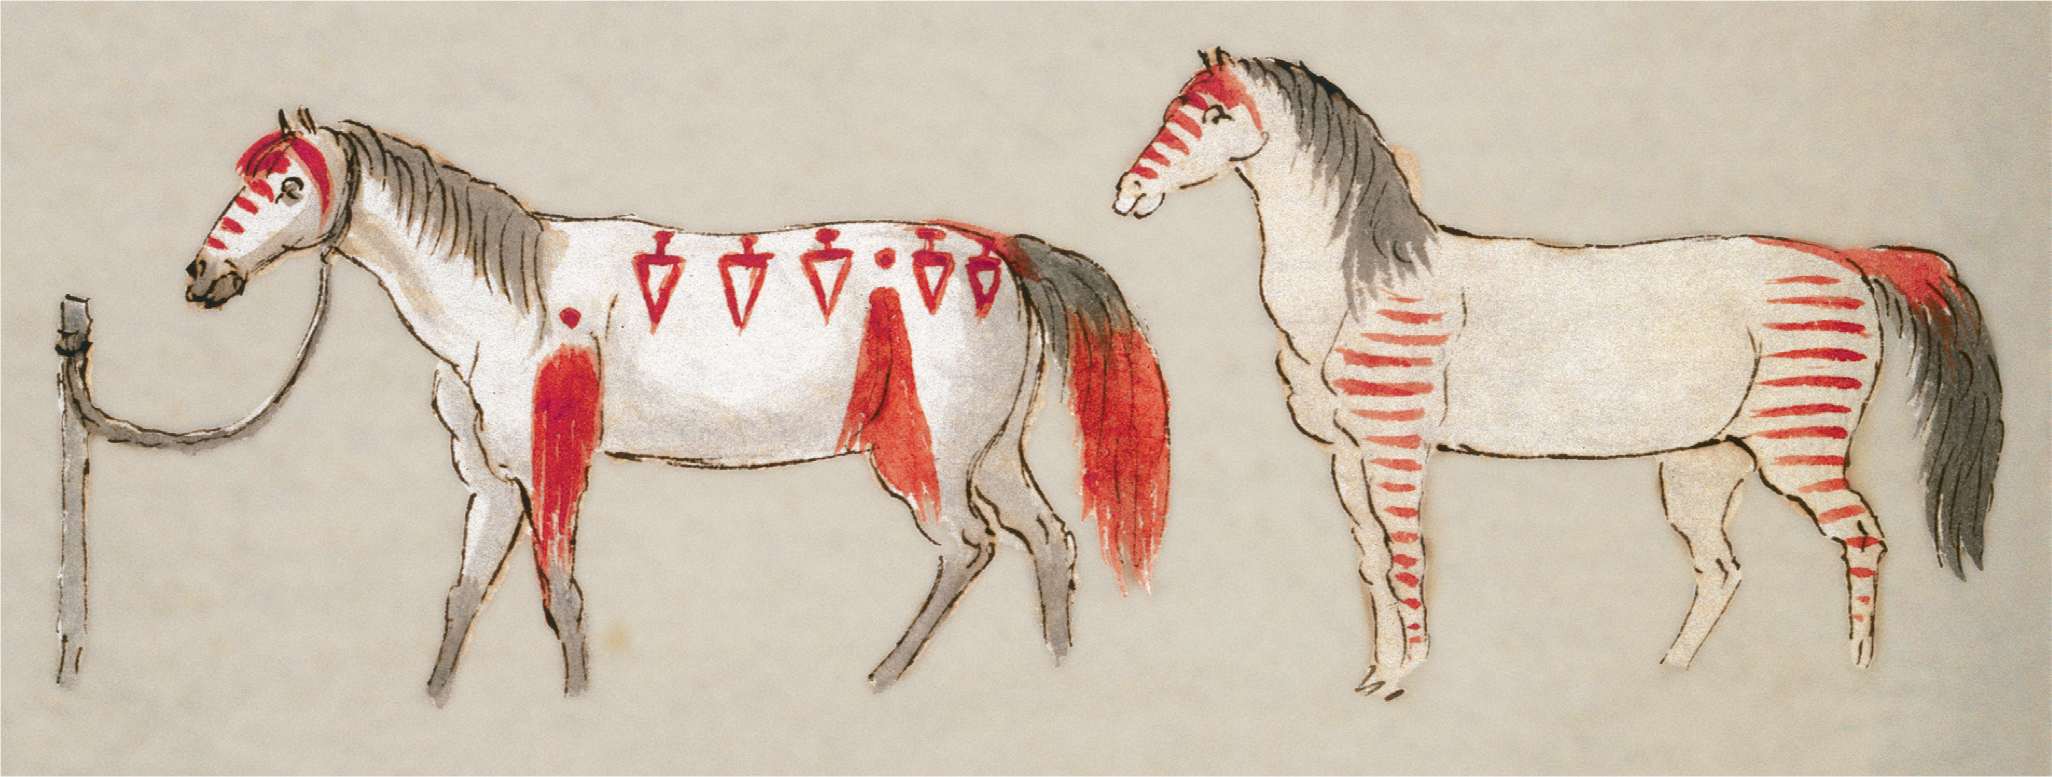 Figure 12.3. Piegan painted horses.